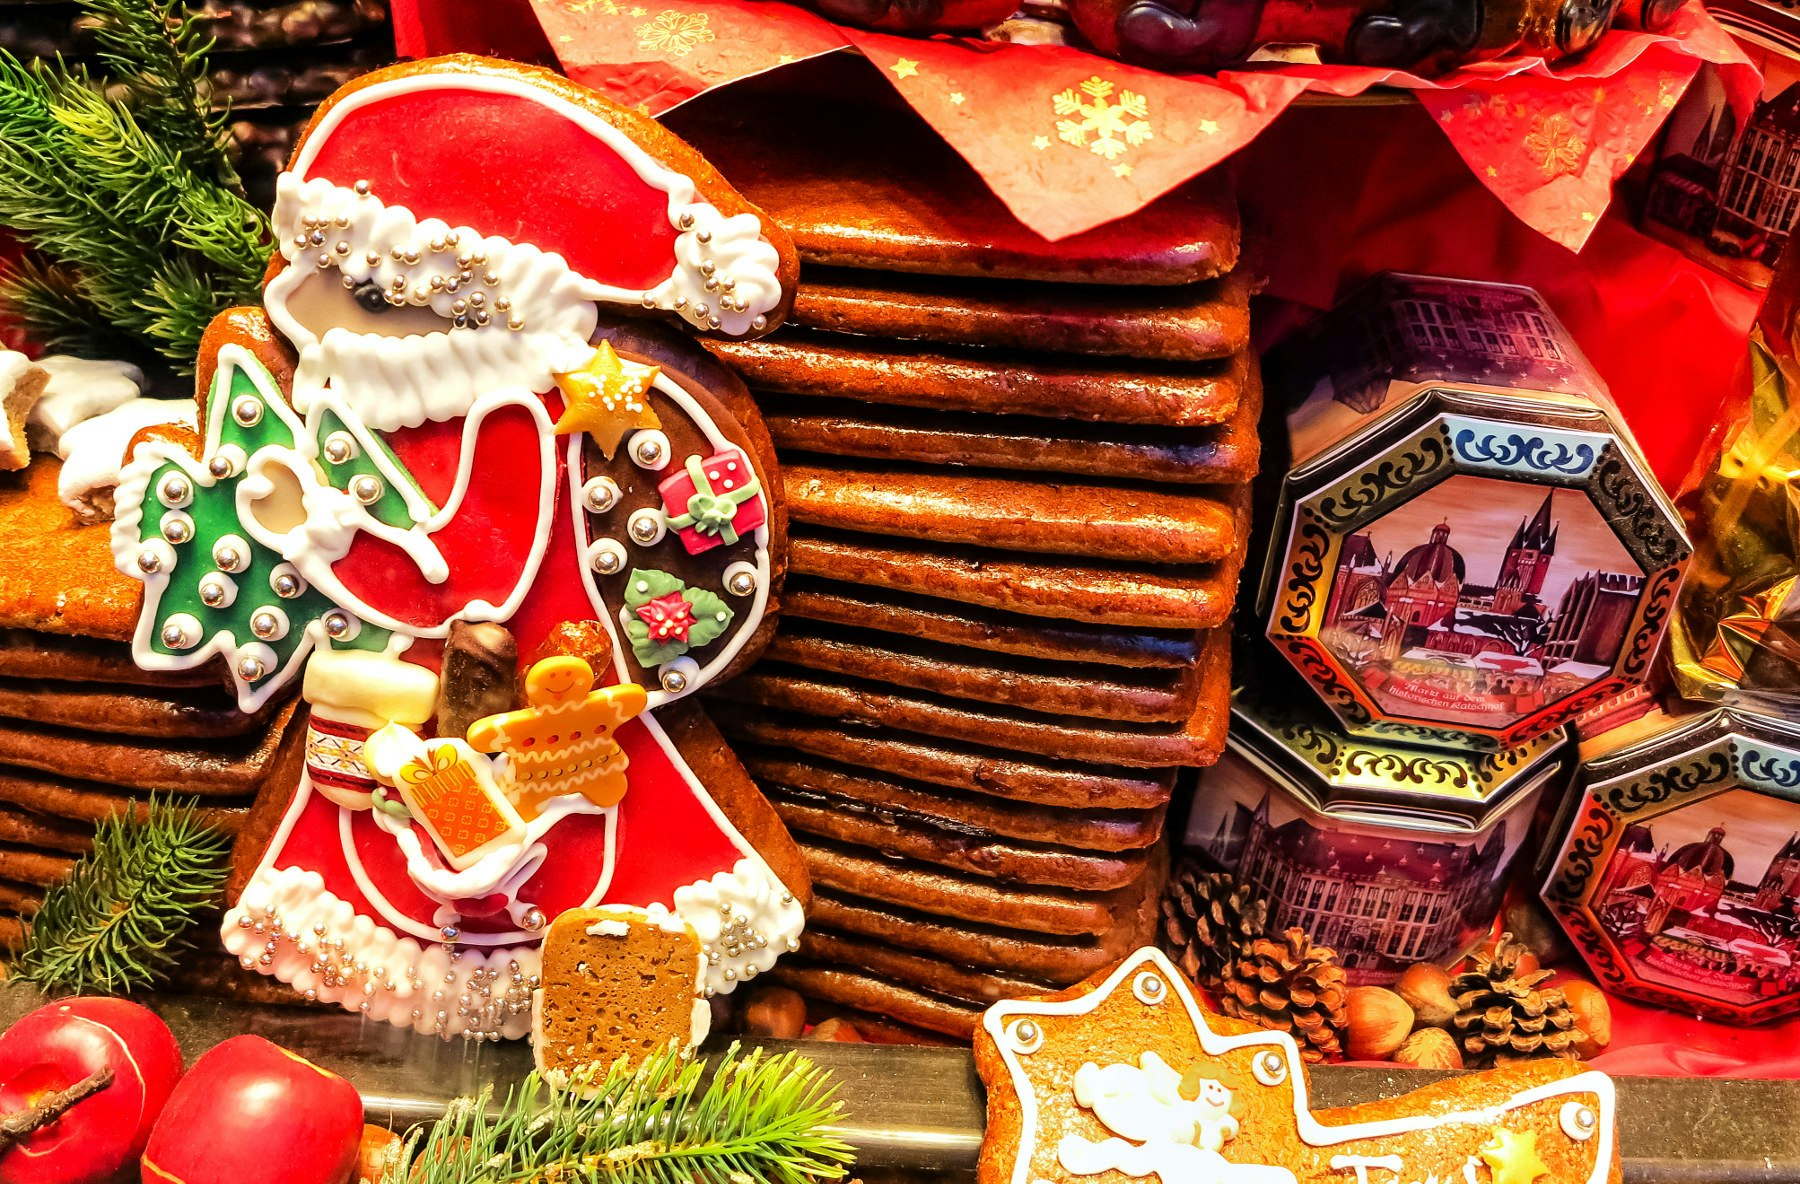 Stacks of Lebkuchen next to a gingerbread Santa Claus